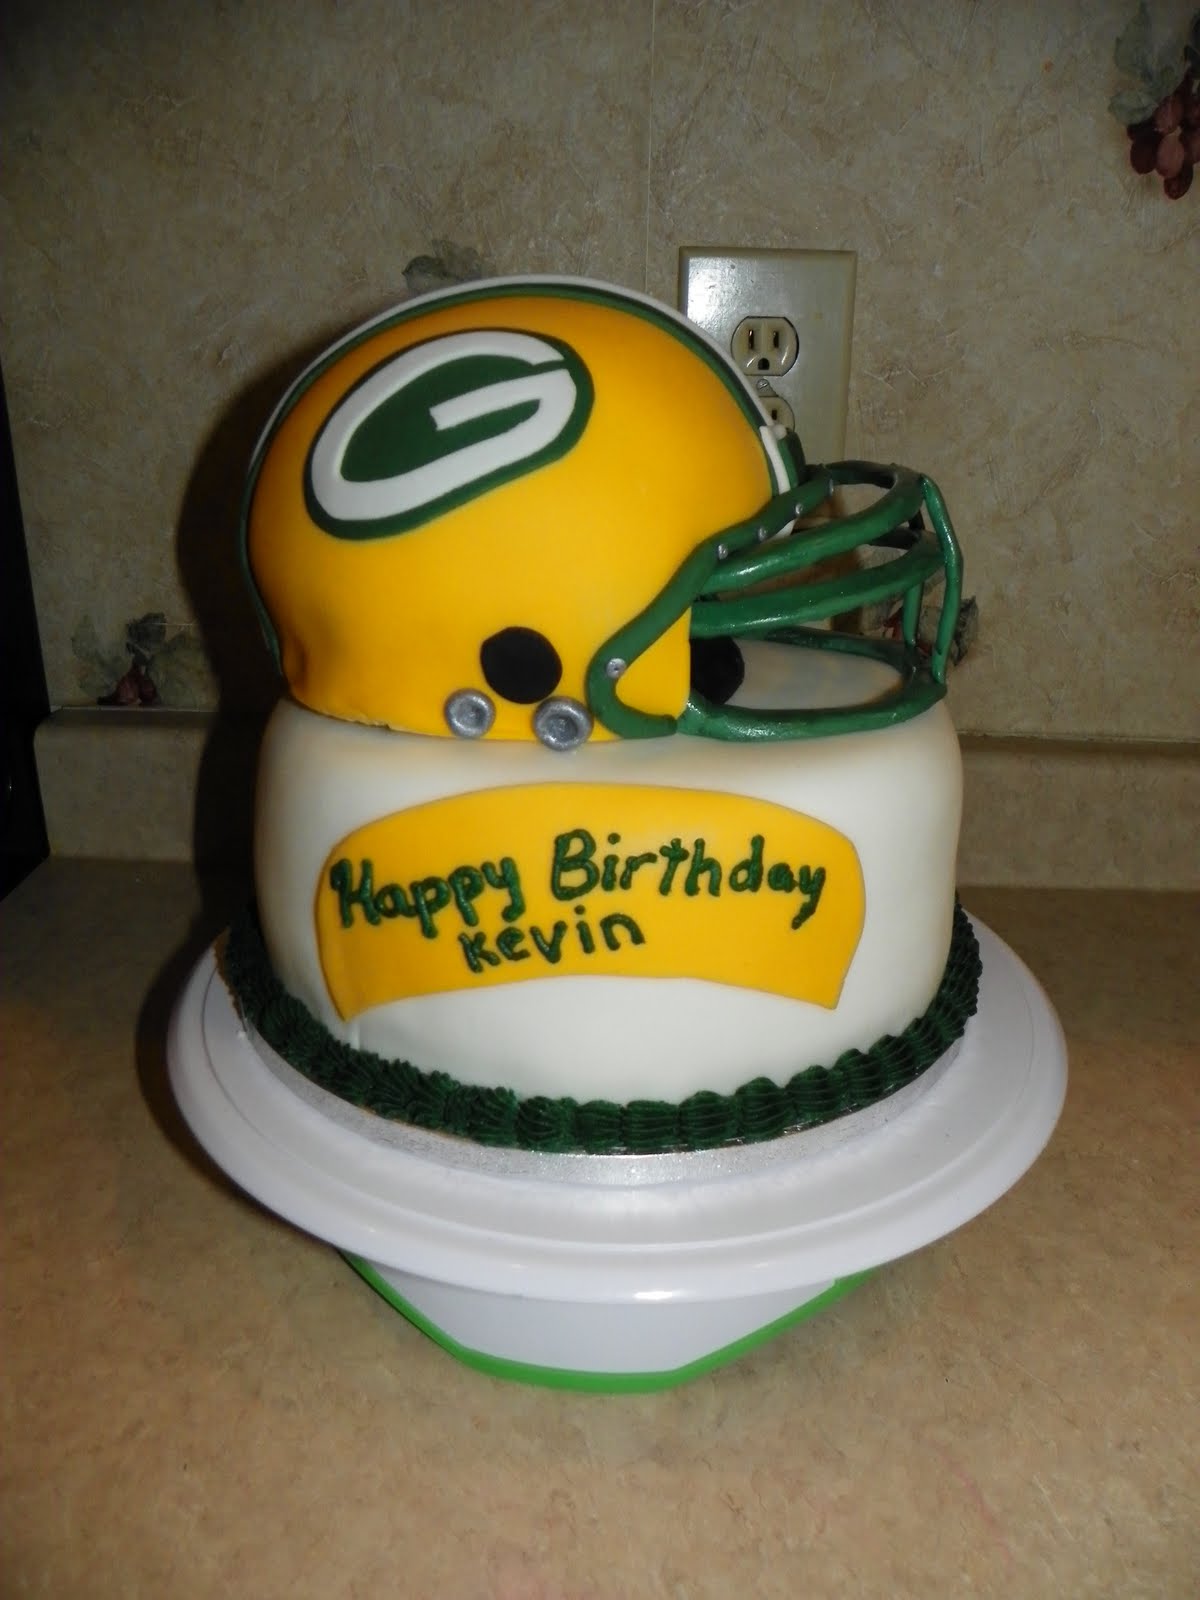 Green Bay Packers Cake